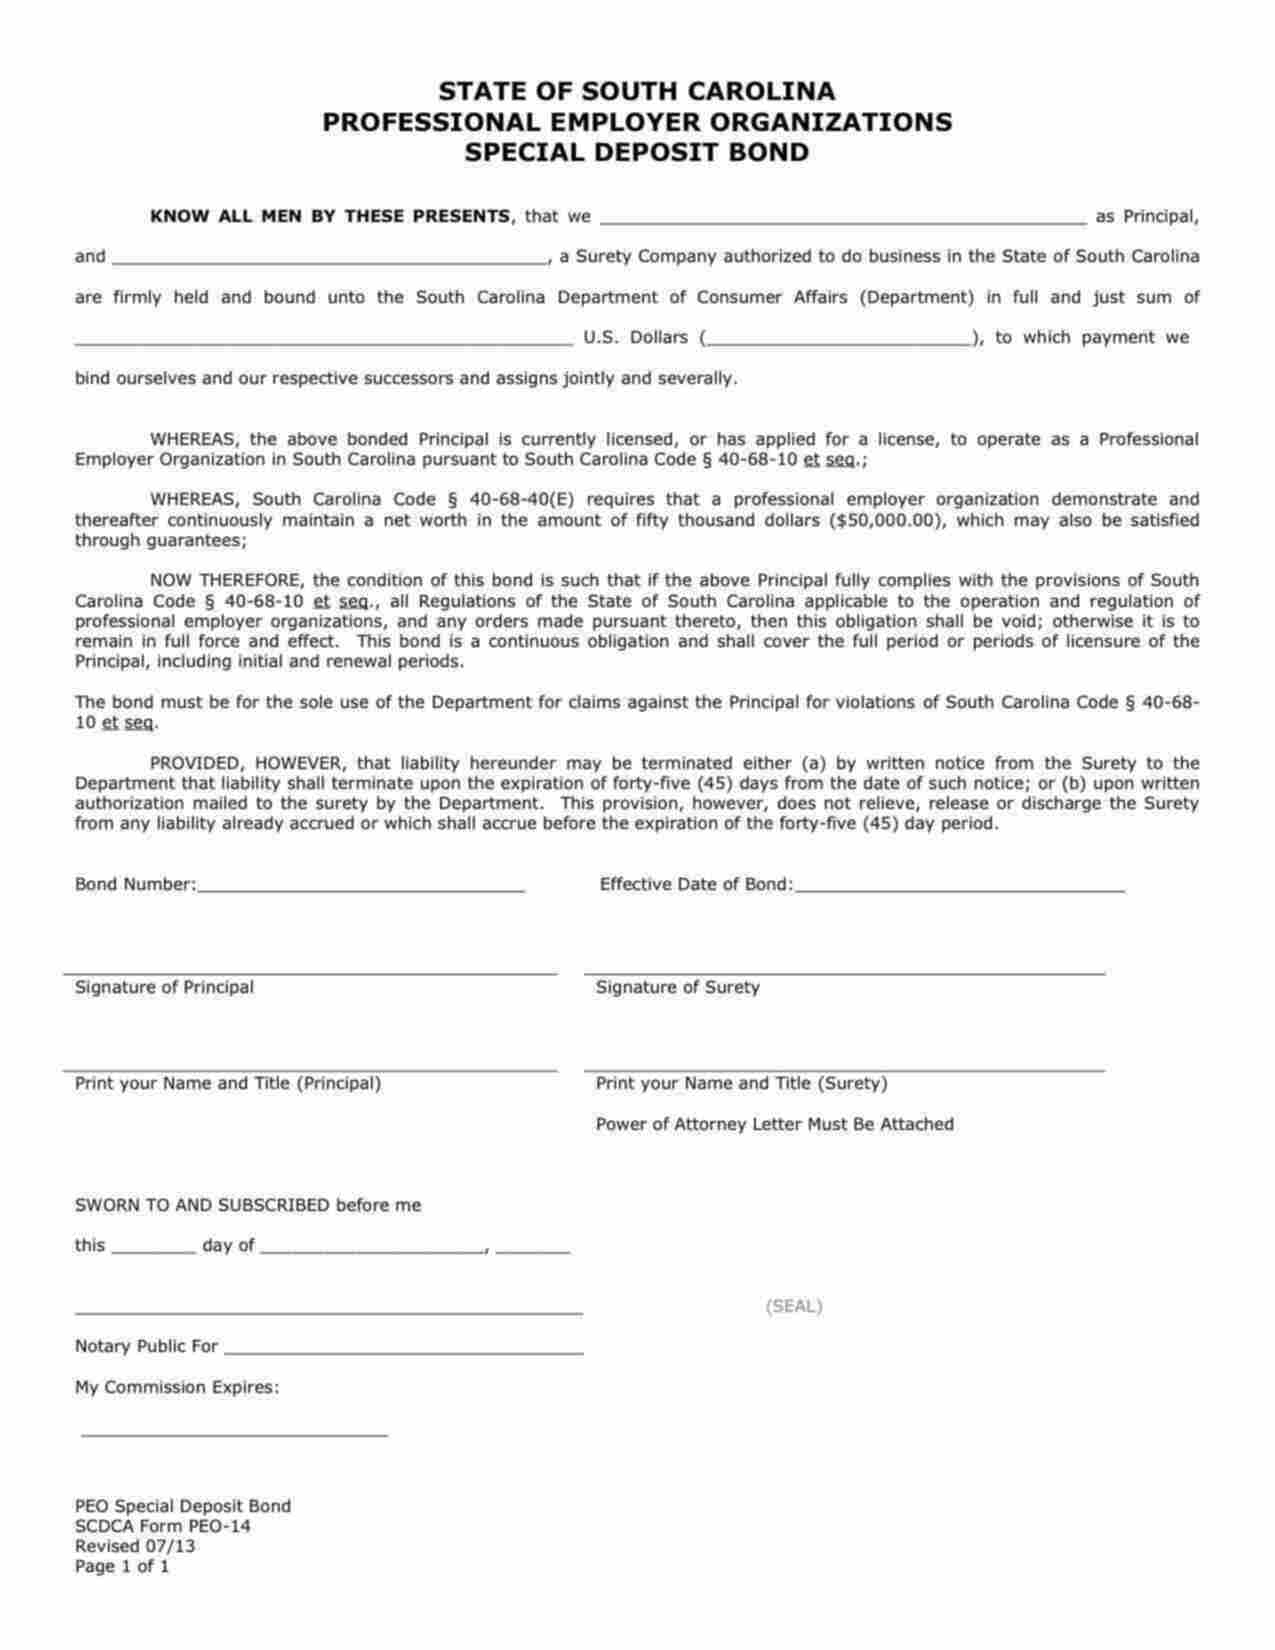 South Carolina Professional Employer Organization Special Deposit Bond Form